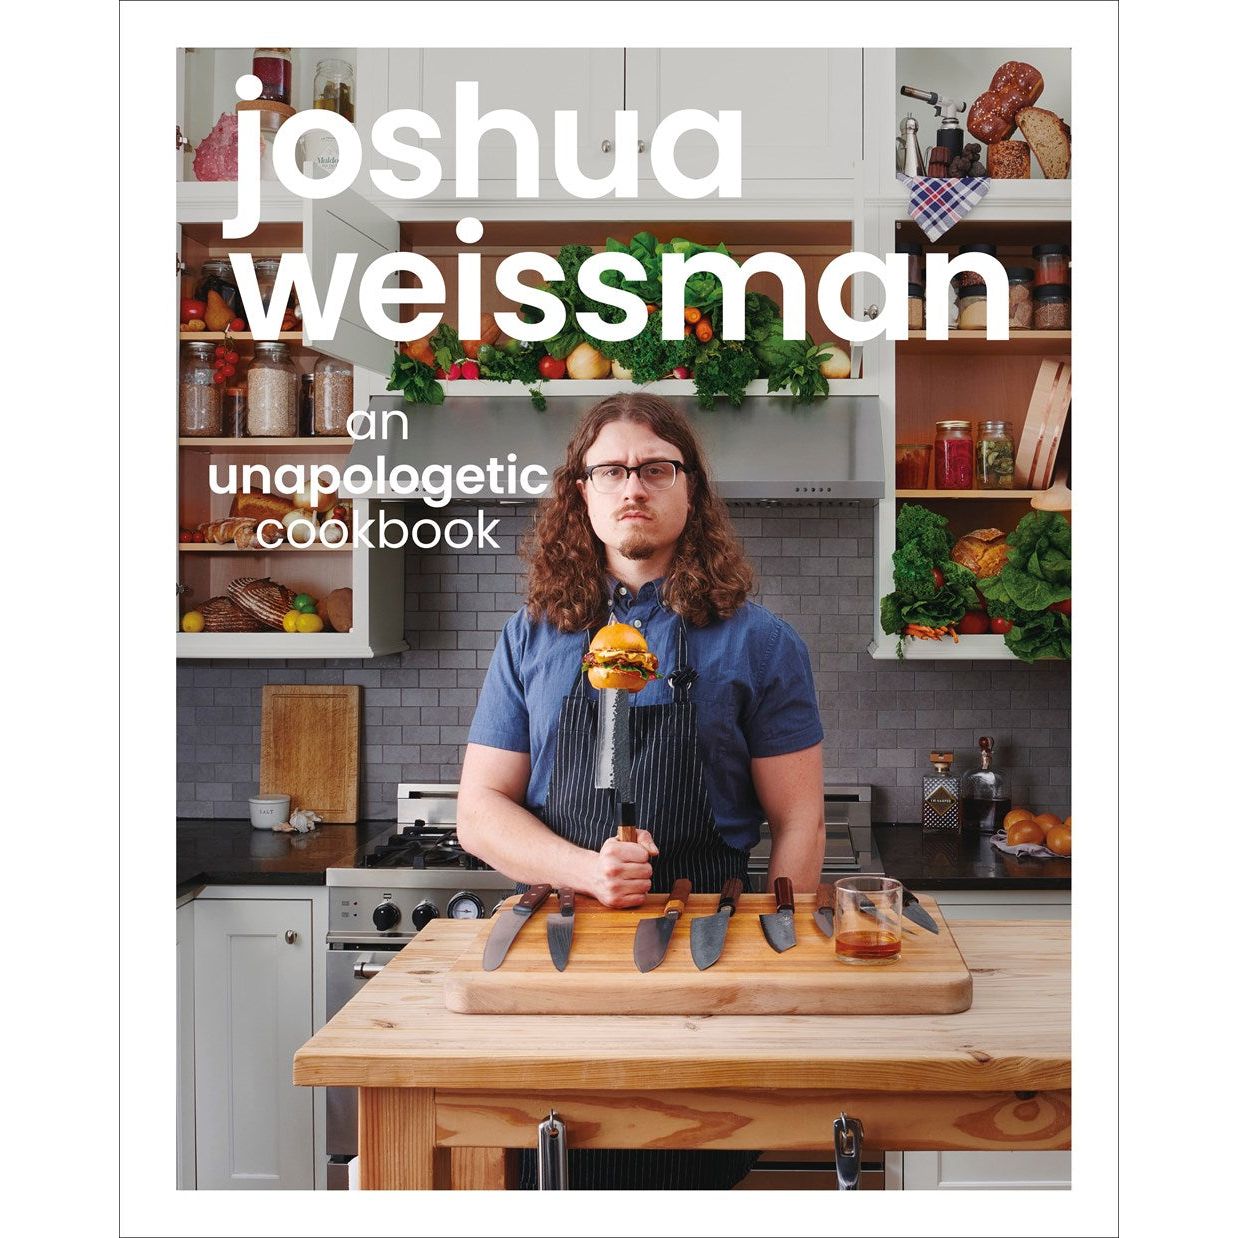 Joshua Weissman: An Unapologetic Cookbook (Joshua Weissman)